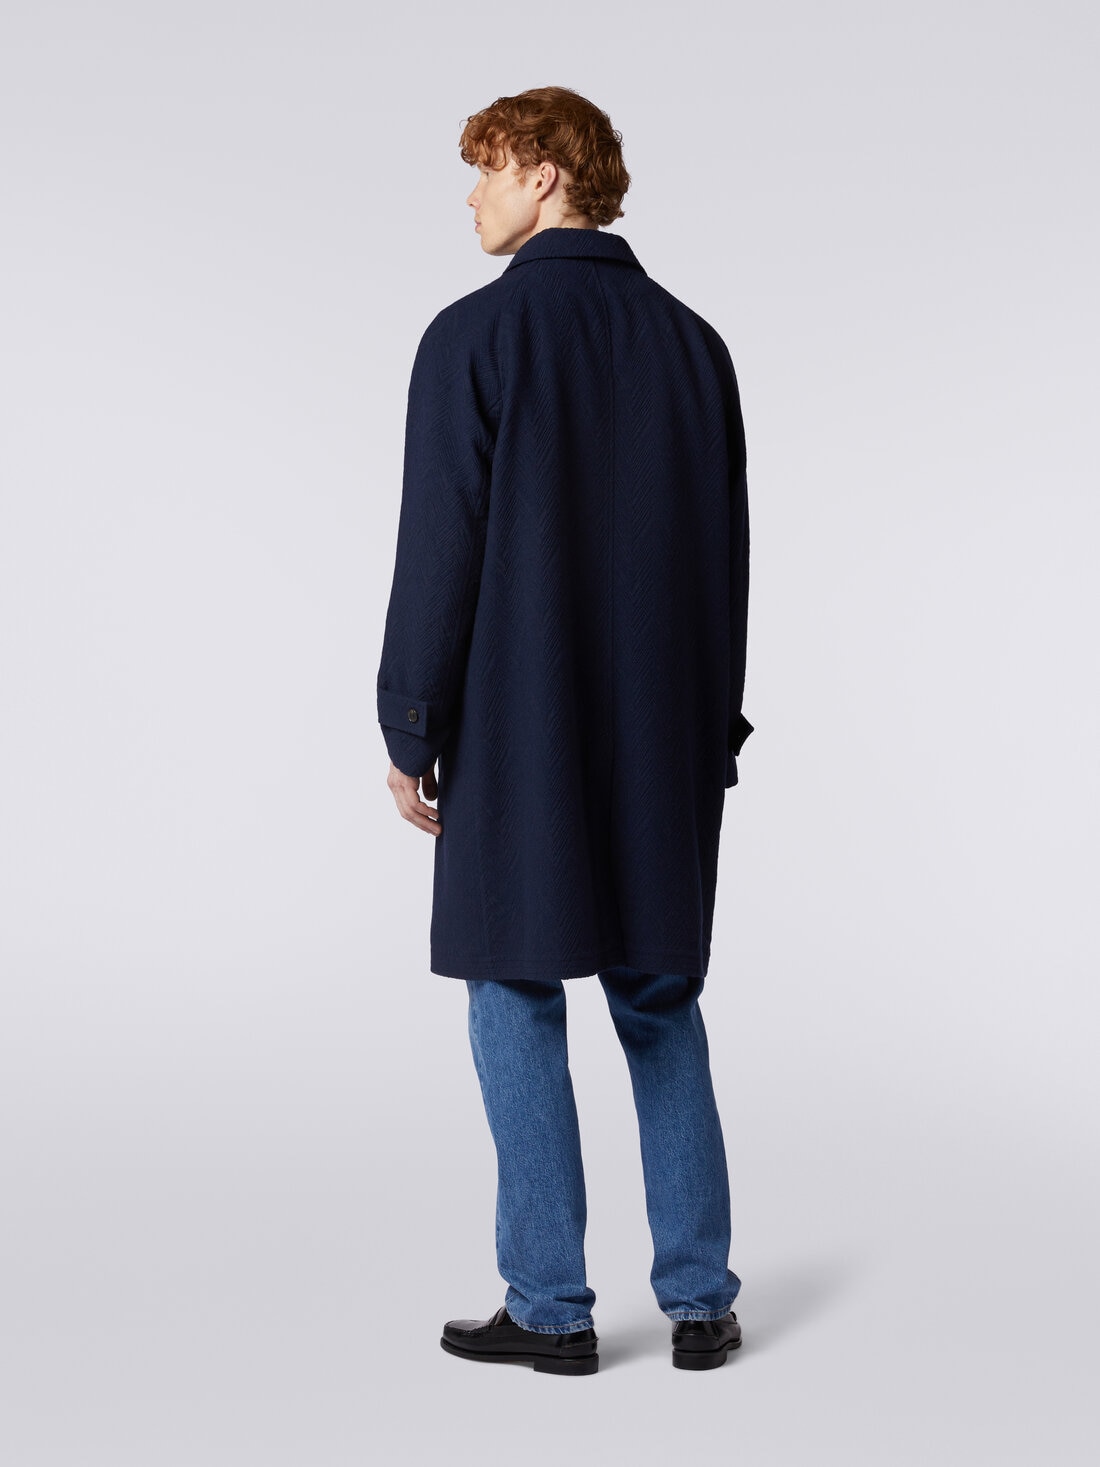 Jacquard wool blend coat with zigzag pattern, Dark Blue - US24SC07BW00R493924 - 3